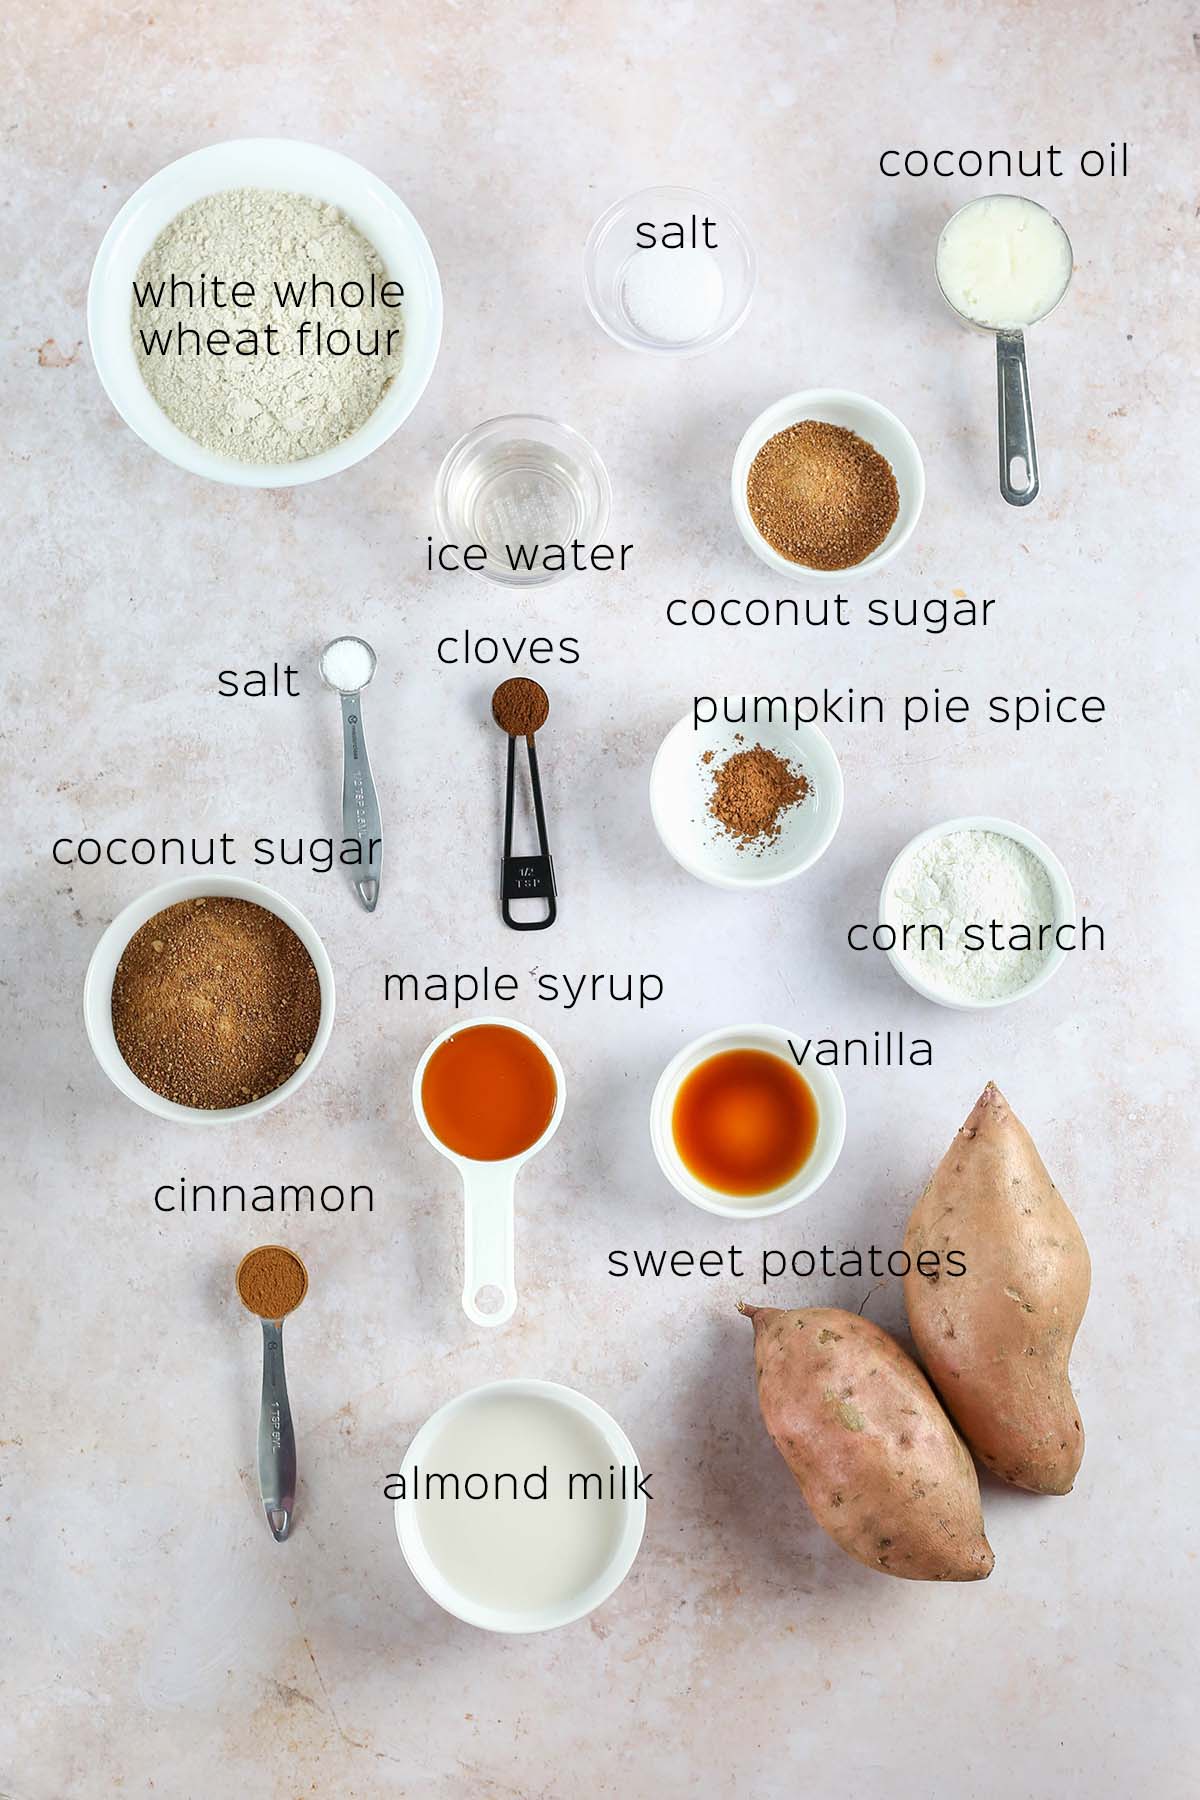 ingredients needed to make the sweet potato pie